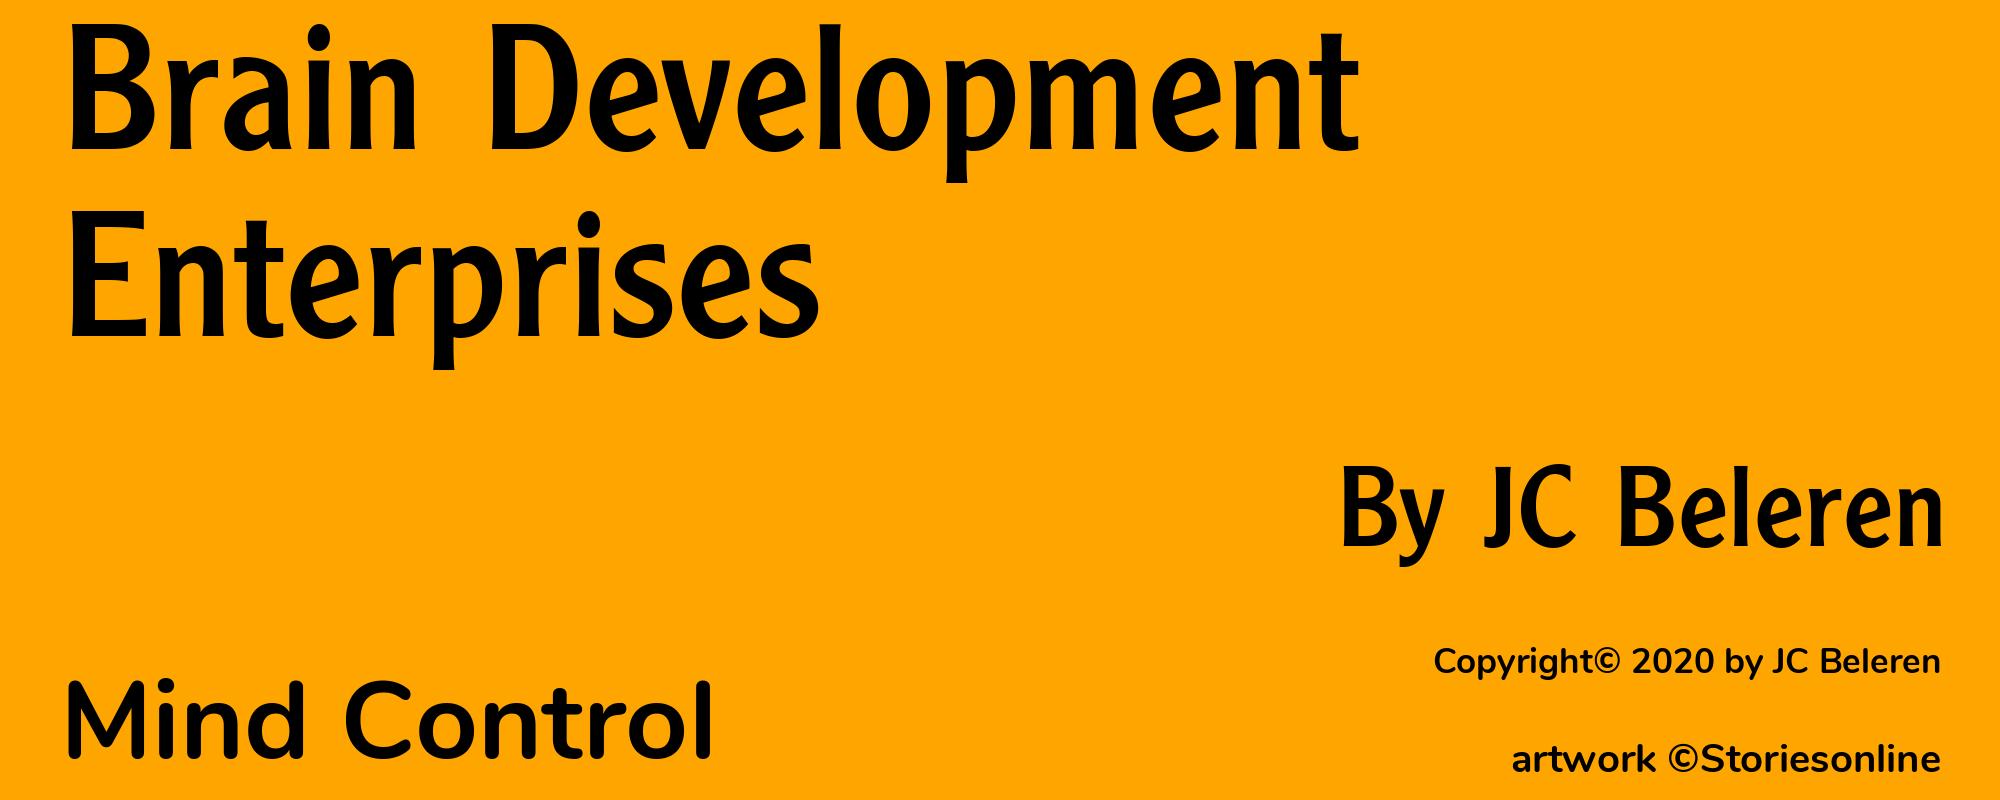 Brain Development Enterprises - Cover